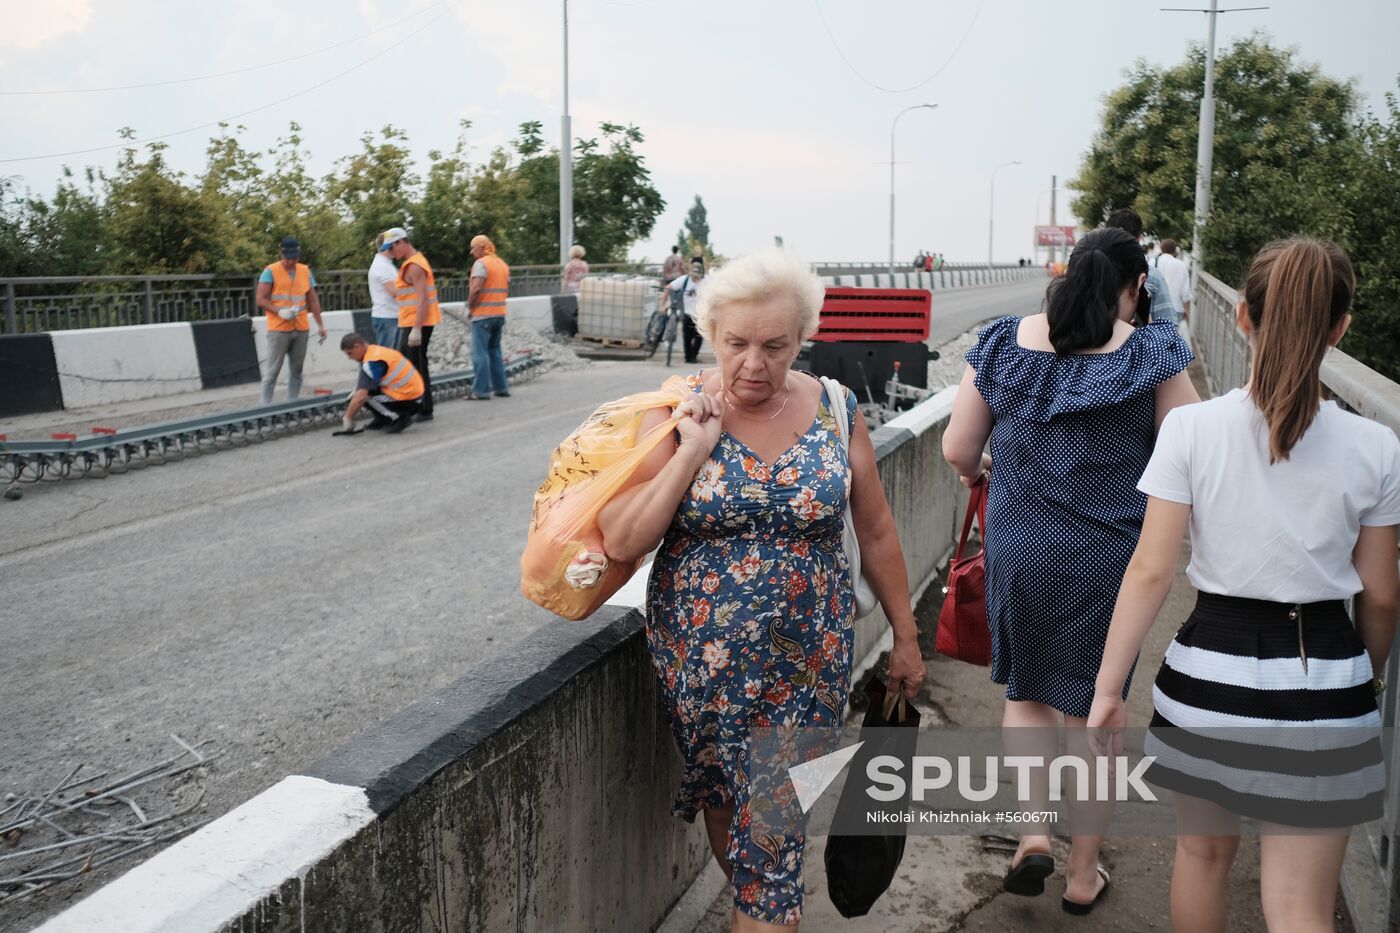 Repair works on Yablonovsky Bridge in Krasnodar Territory